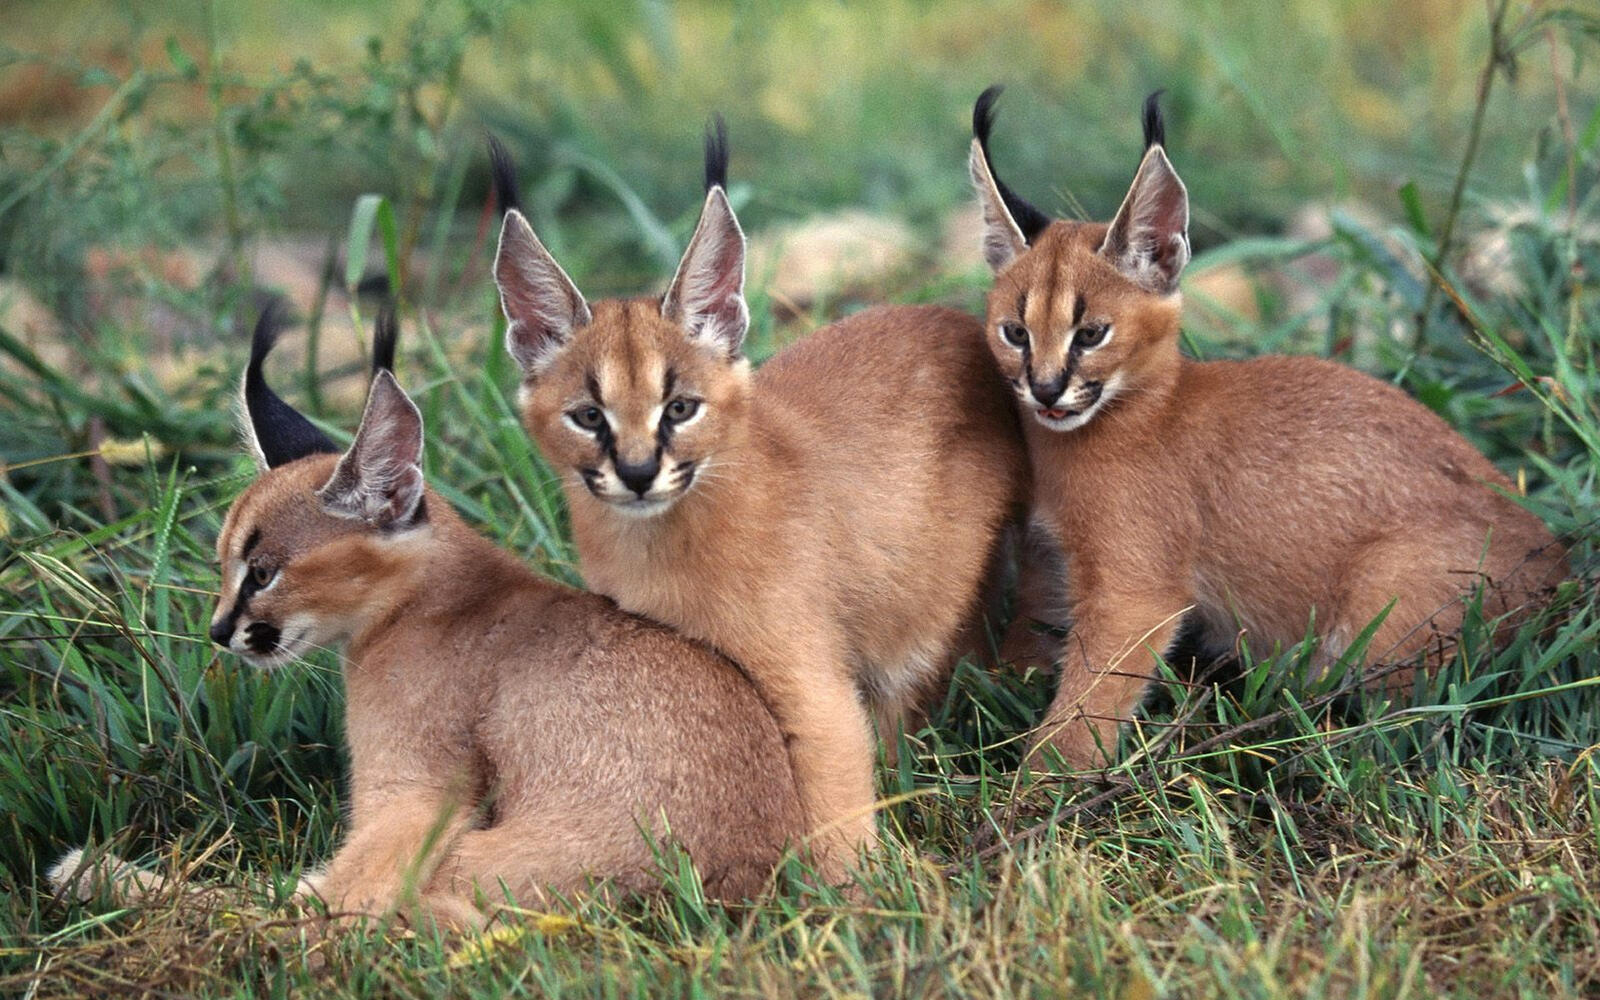 Wallpapers kittens caracals lynx on the desktop